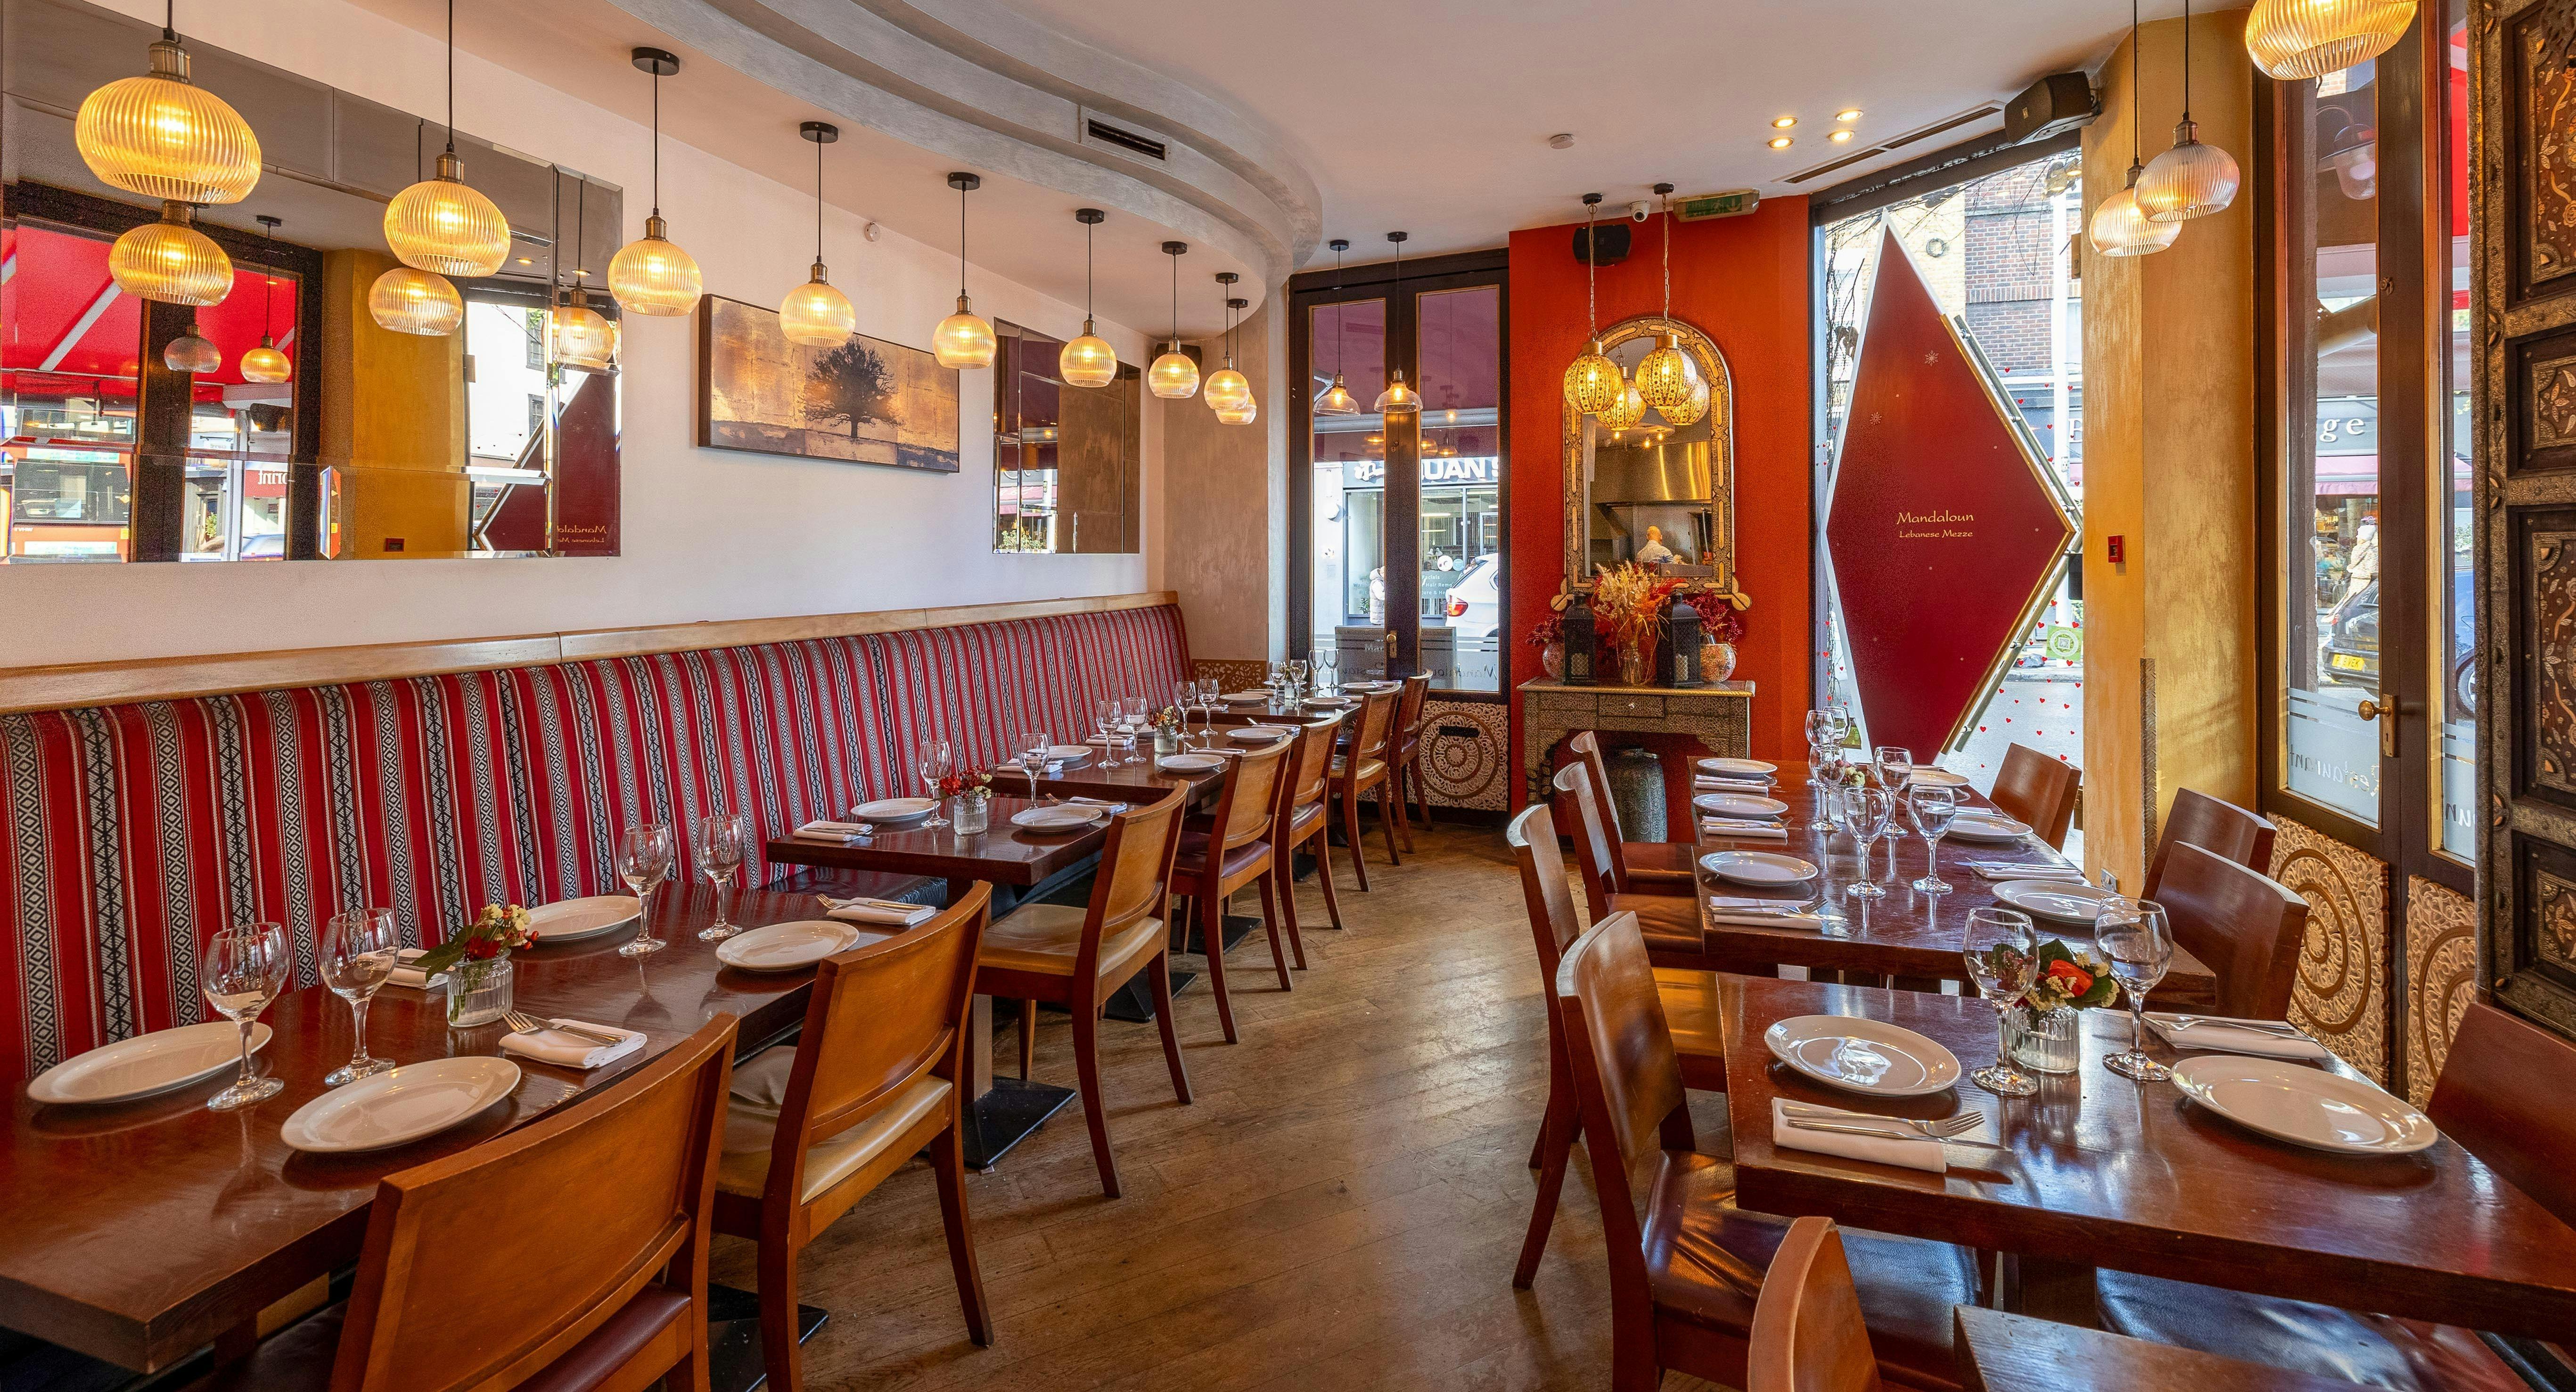 Photo of restaurant Mandaloun Chelsea in Chelsea, London